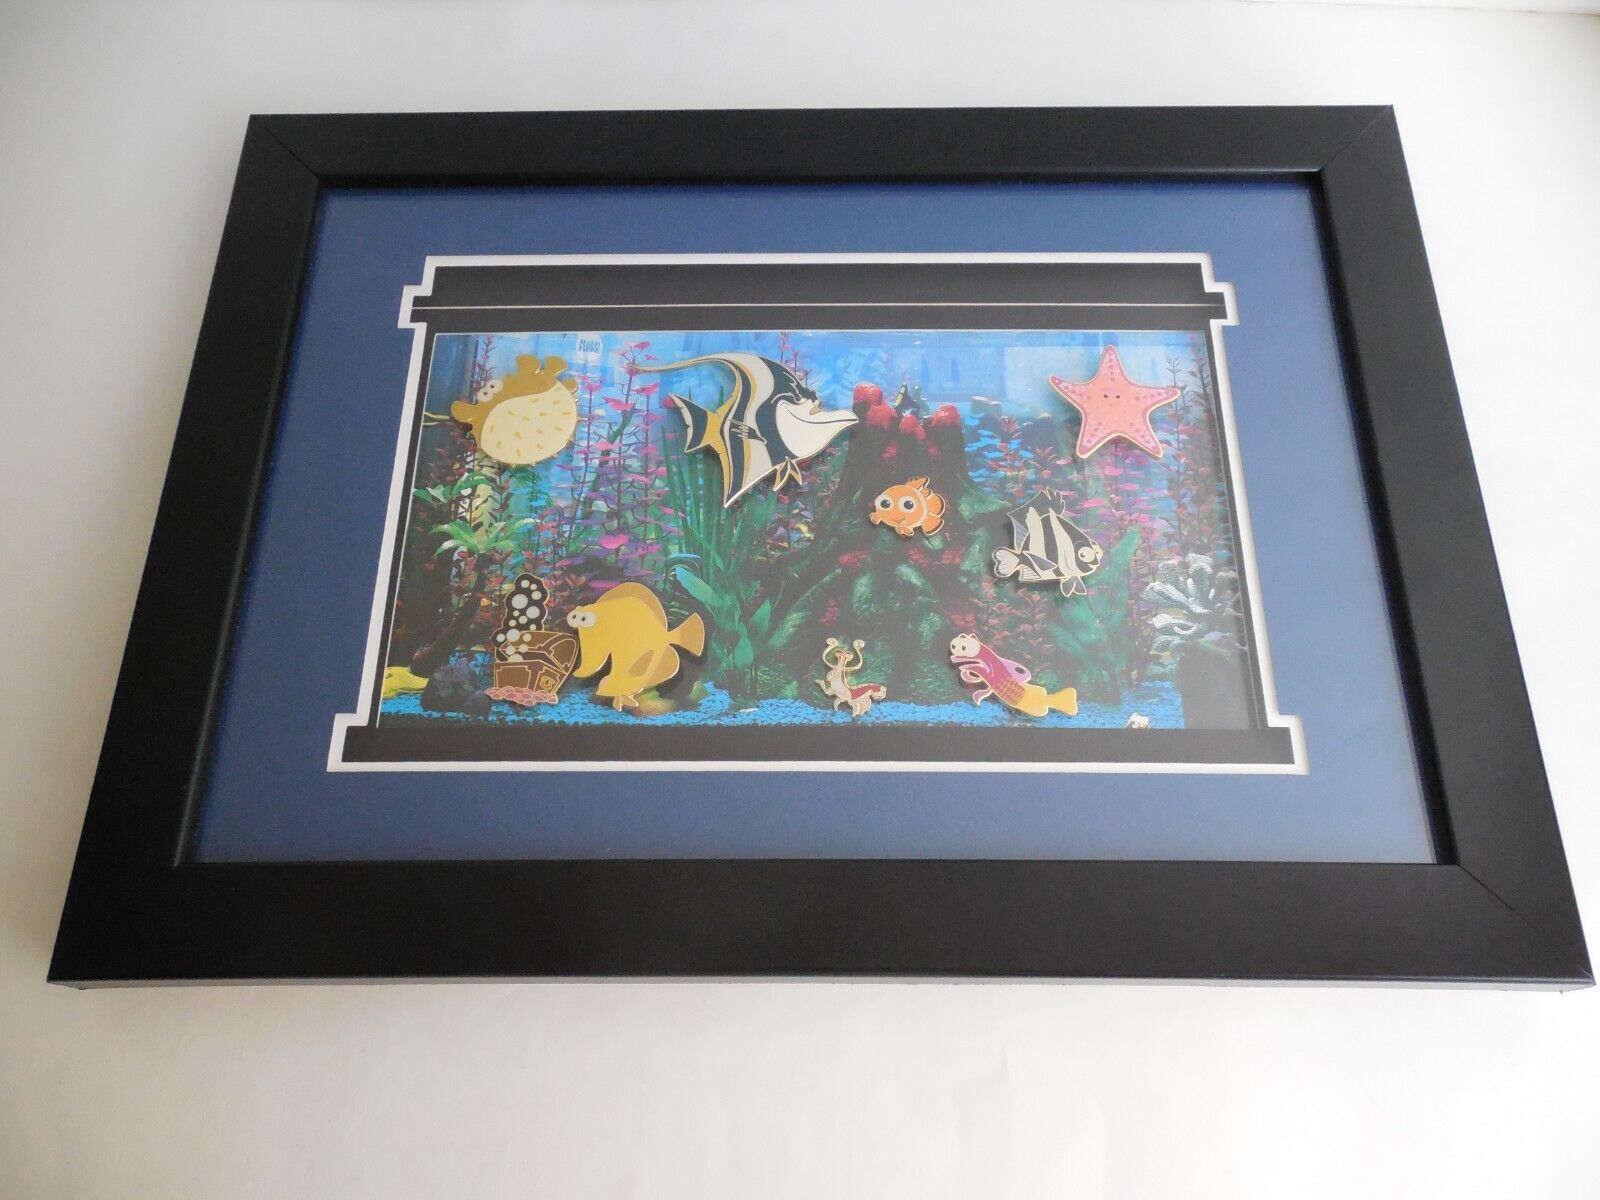 Disney Pixar Finding Nemo Fish Tank Gang Framed Pin Set Walt Disney World 43514